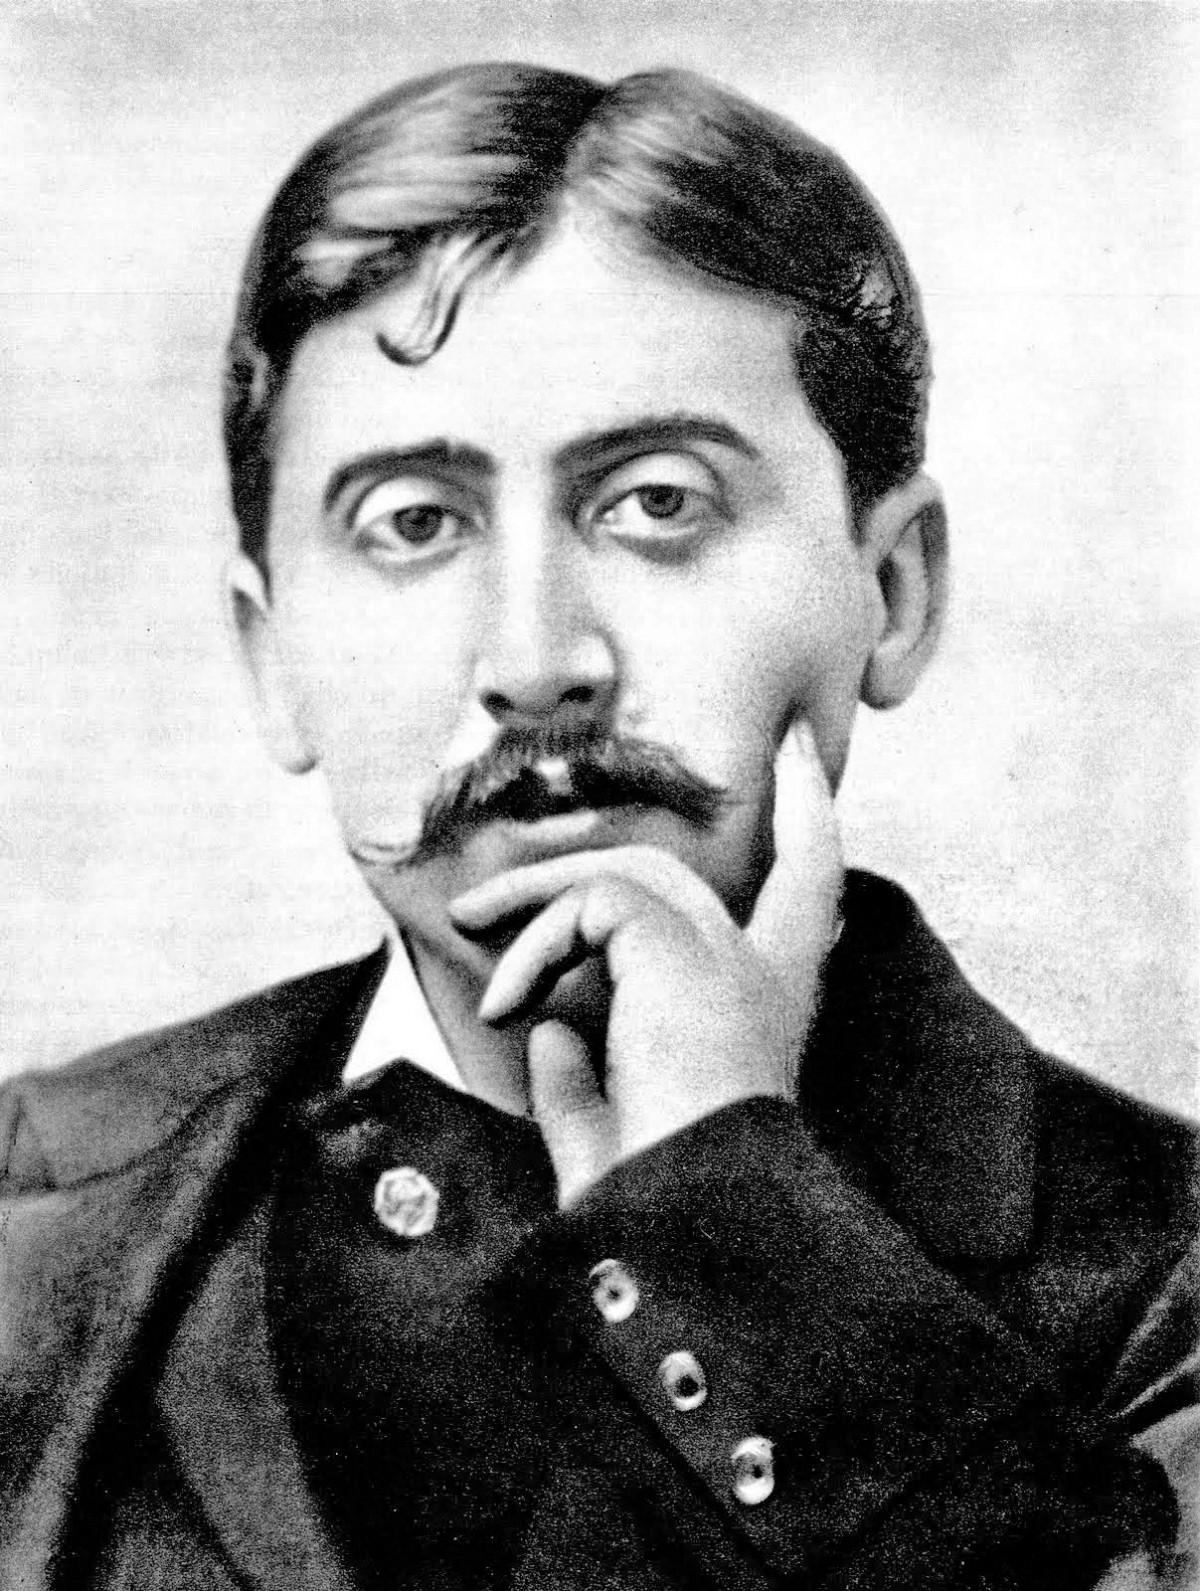 Marcel_Proust_1895 | pixabay